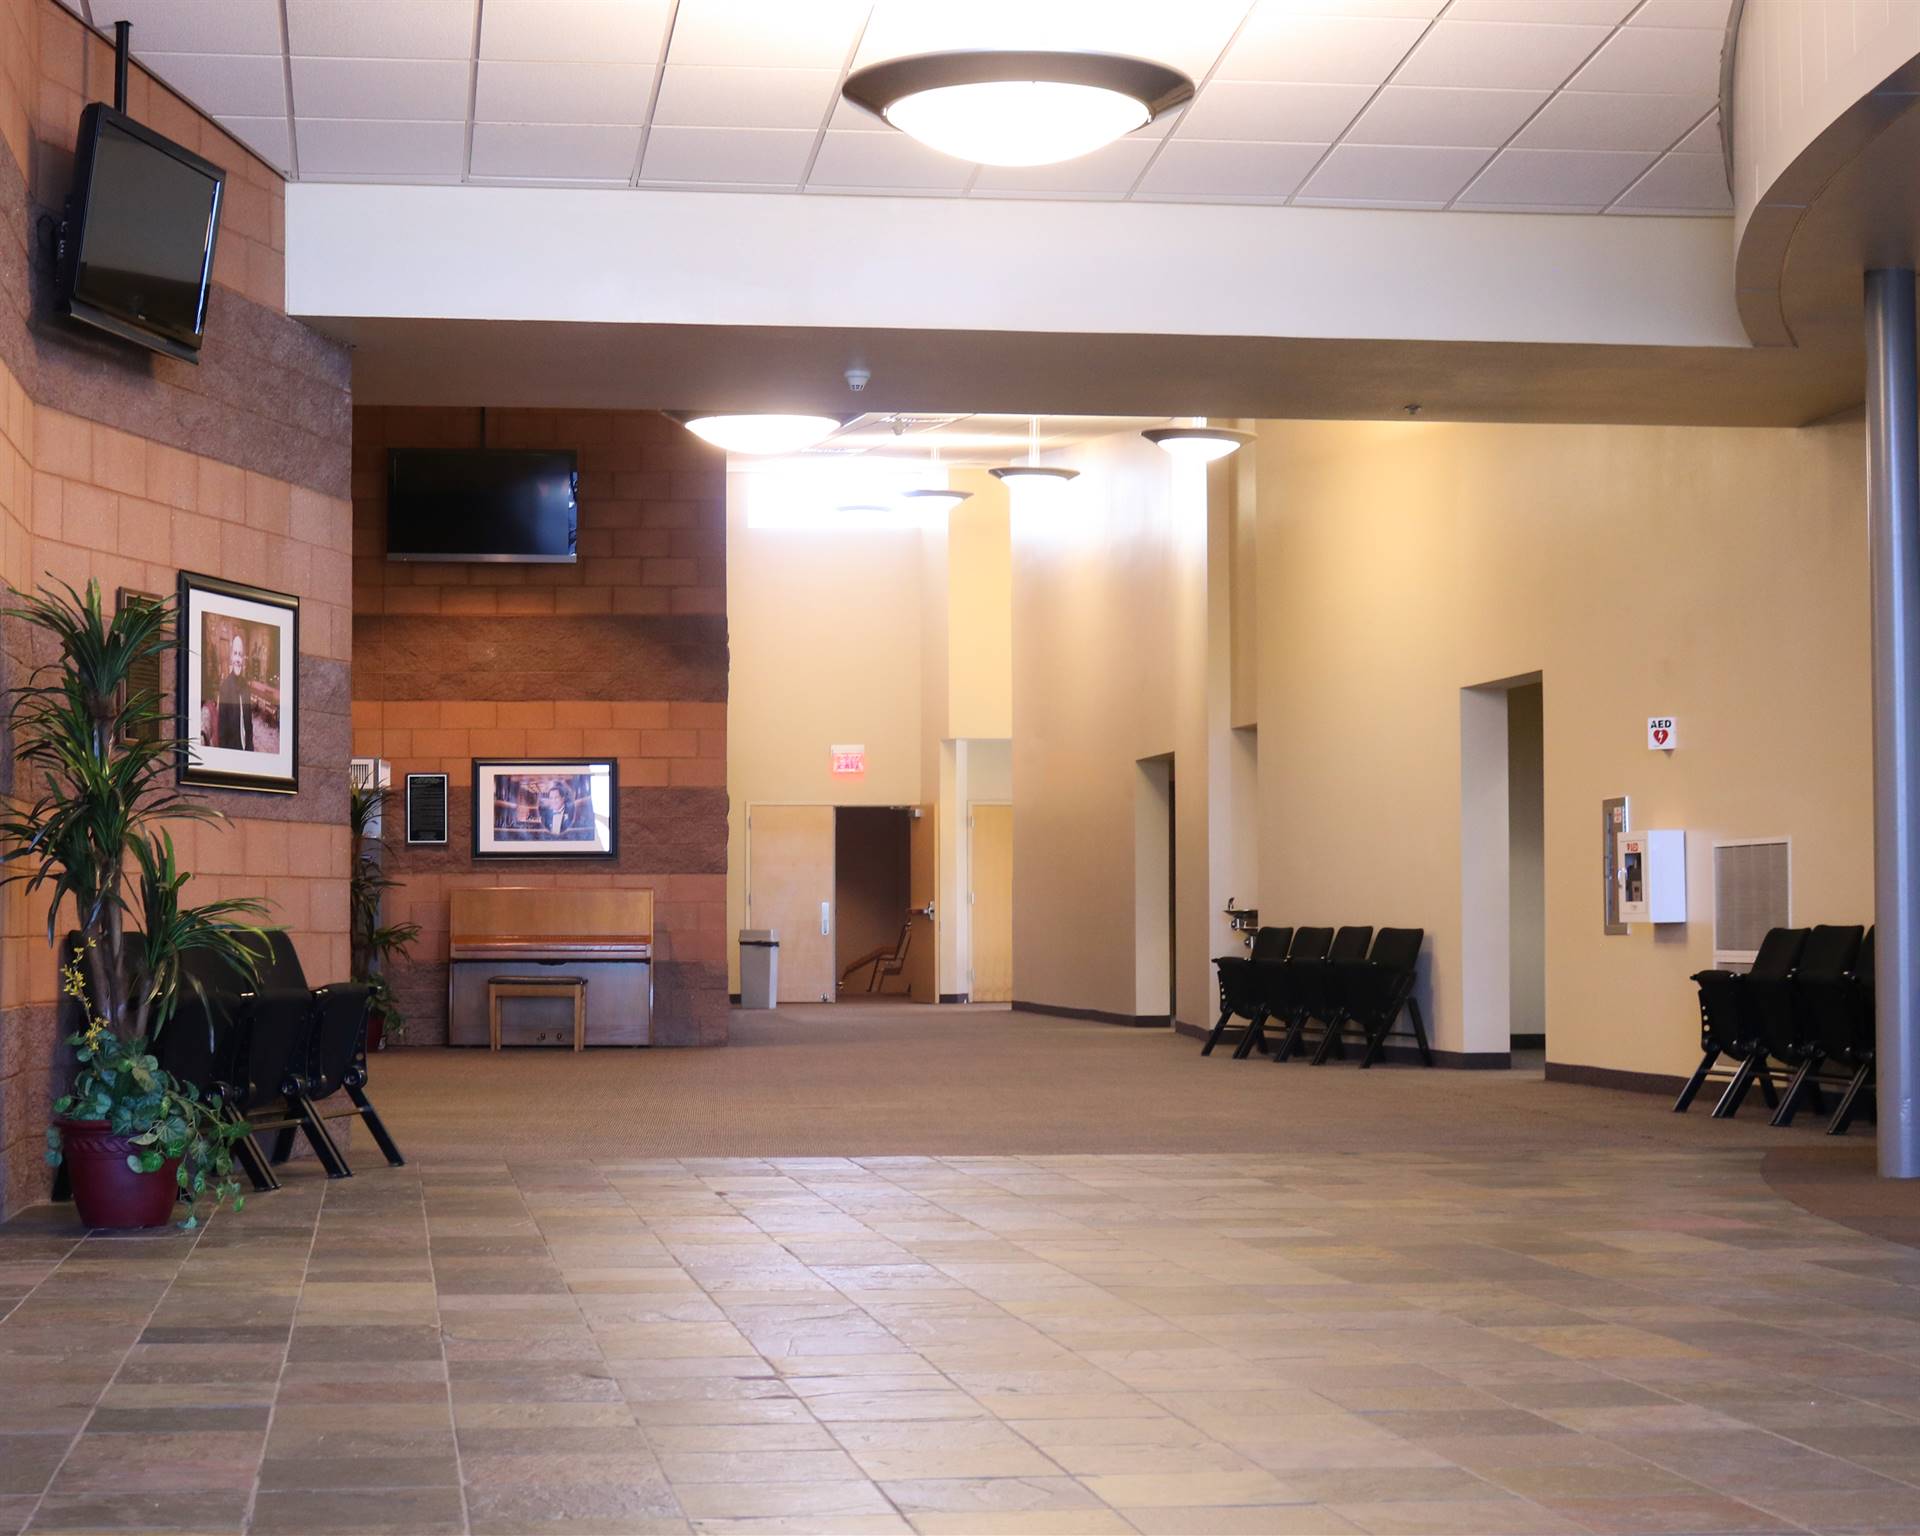 Performing Arts Center Lobby